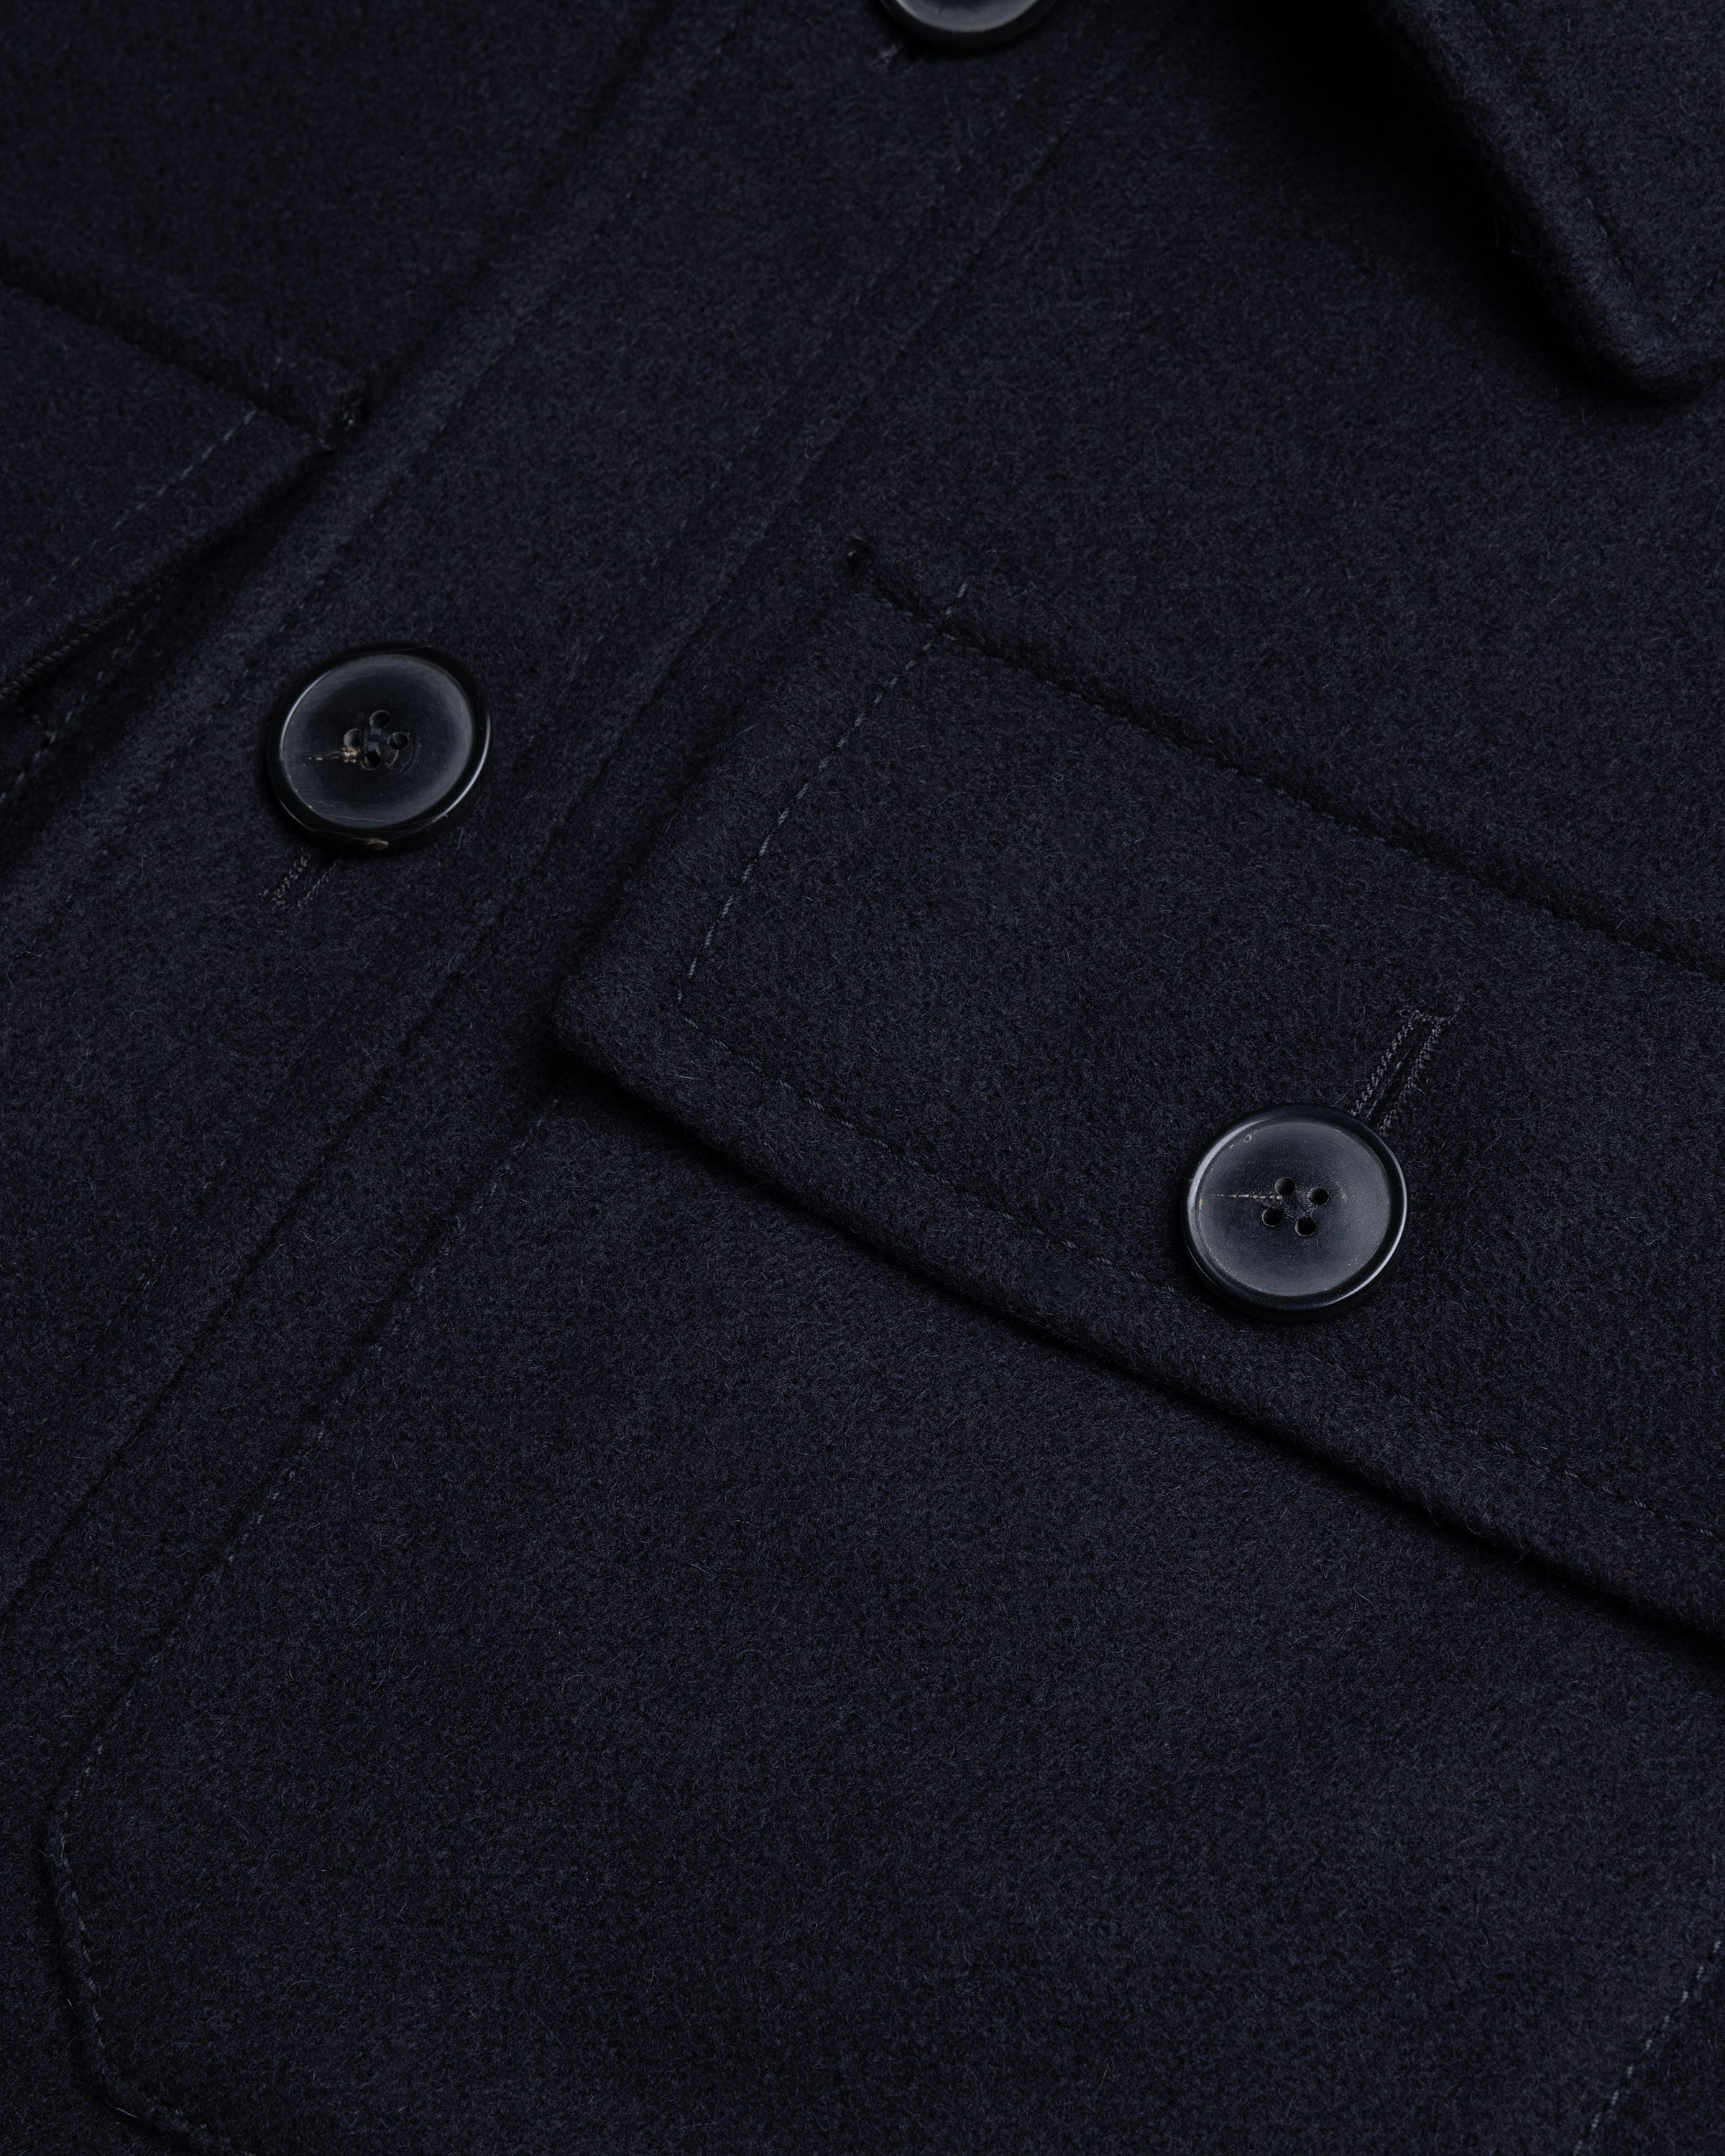 Dries van Noten - Valko Jacket Black - Clothing - Black - Image 7